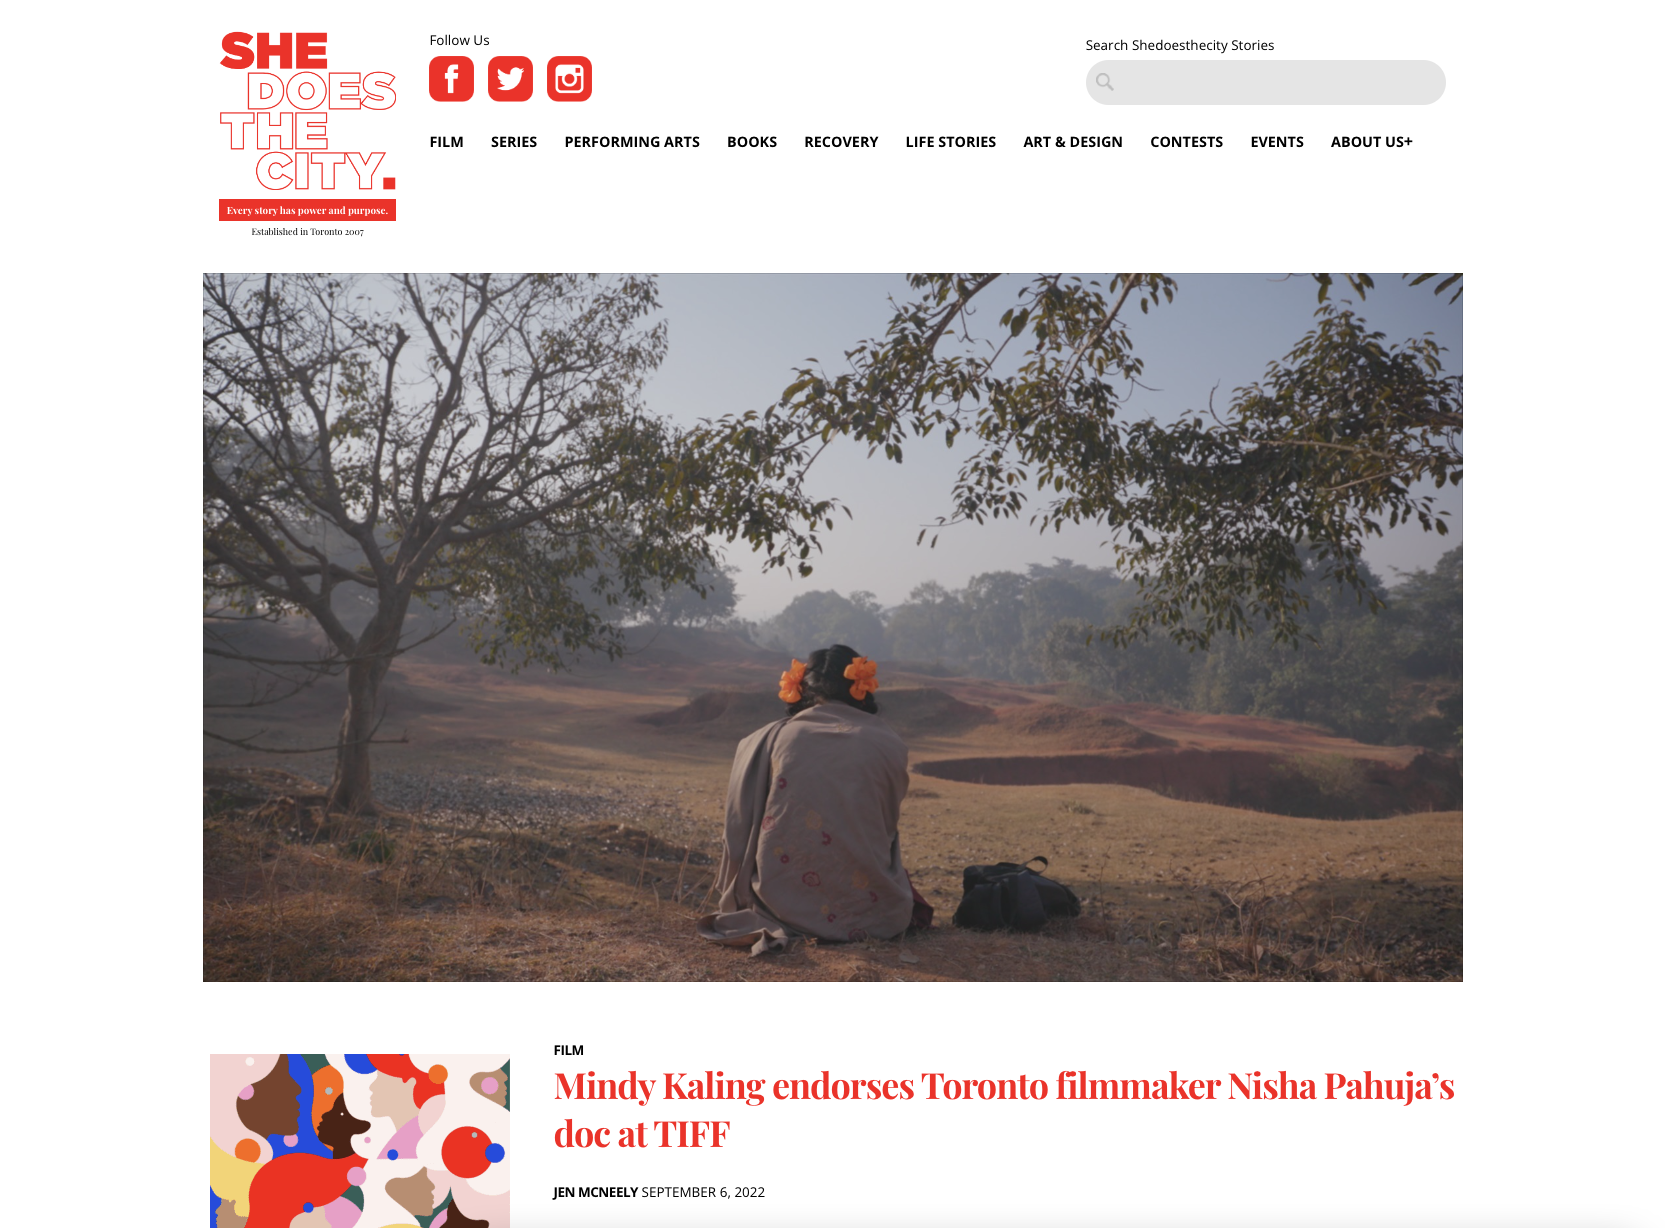 Mindy Kaling endorses Toronto filmmaker Nisha Pahuja’s doc at TIFF